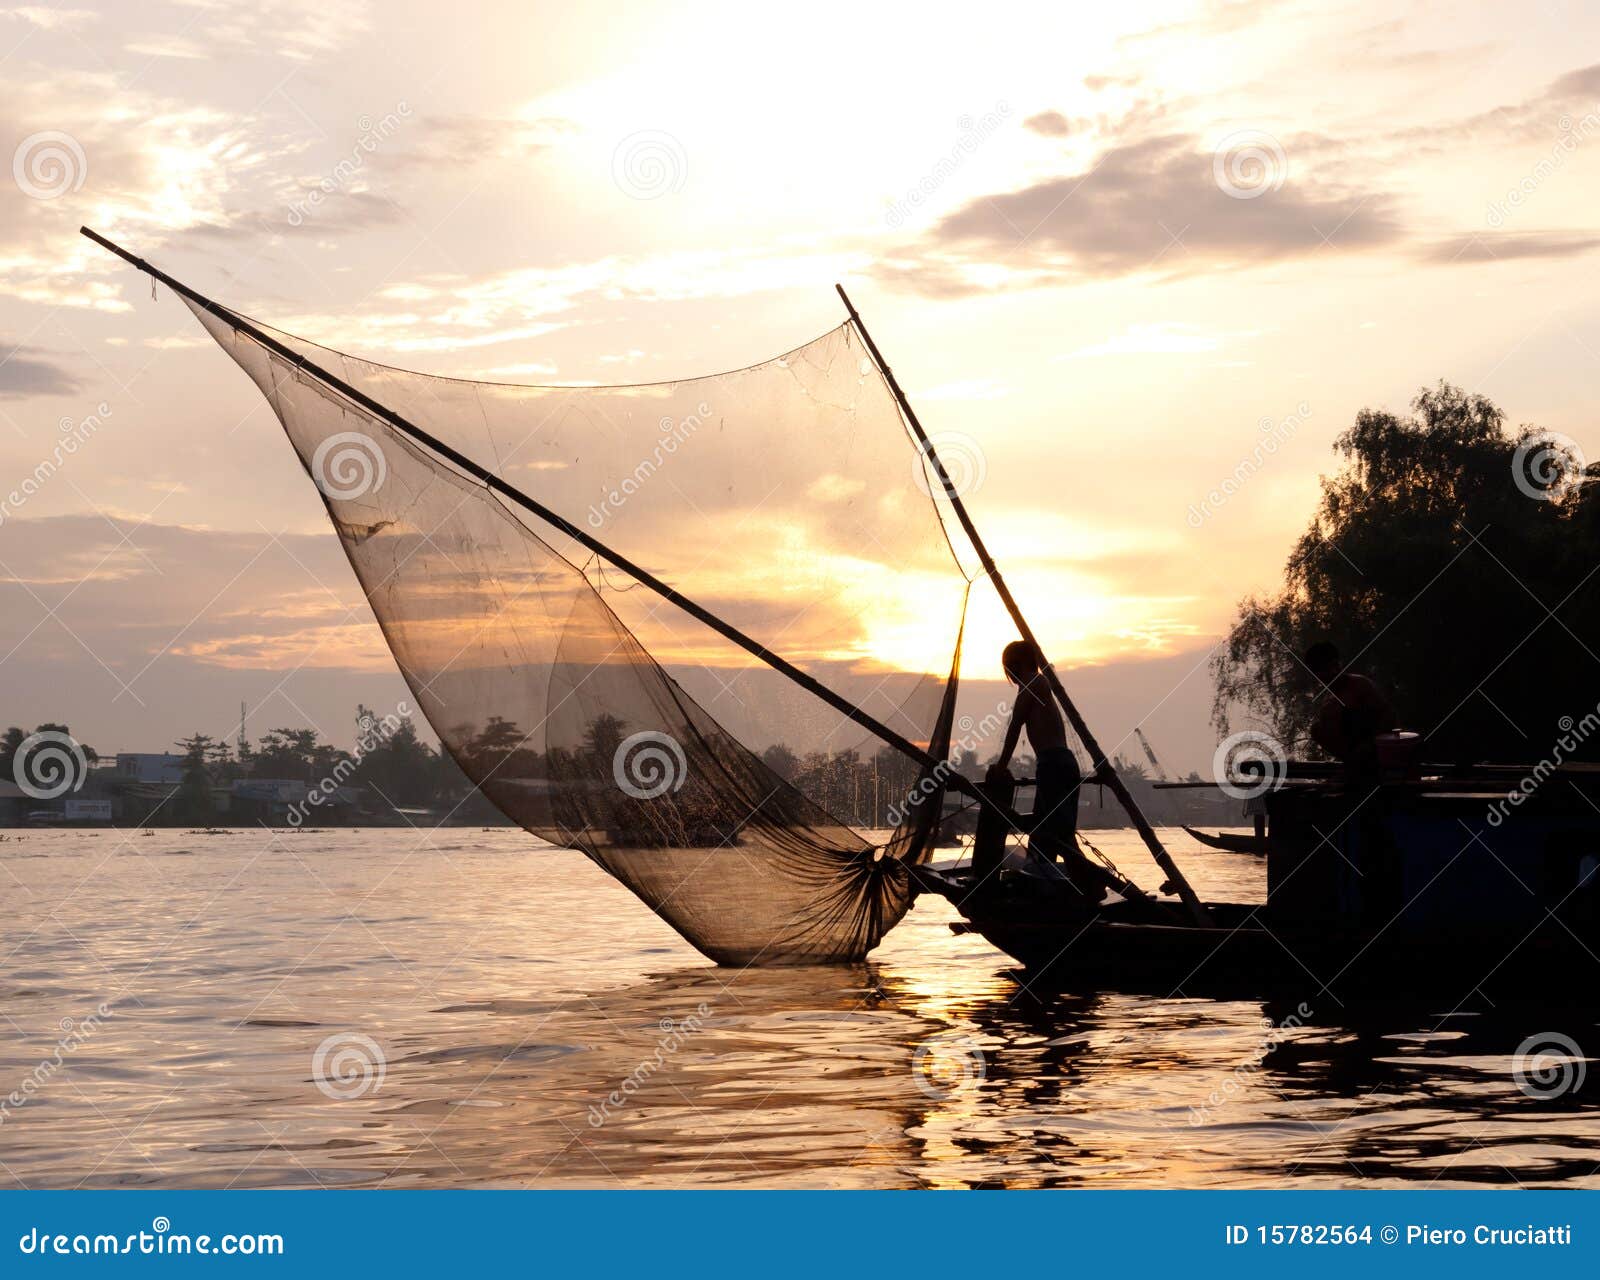 beautiful vietnam: fisherman at dusk